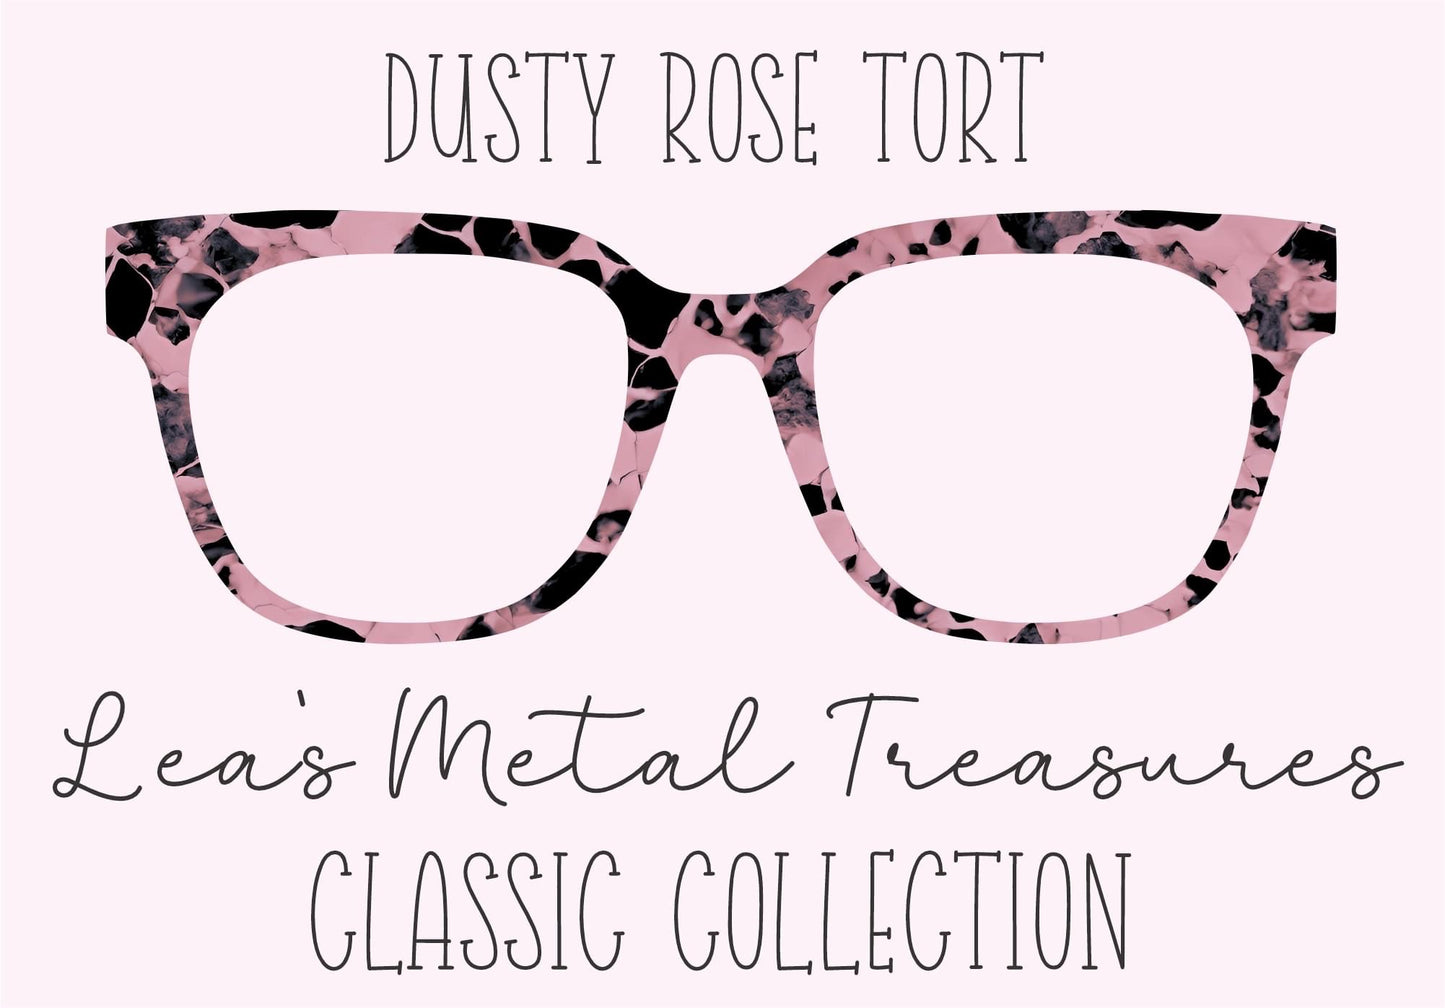 Dusty Rose Tort